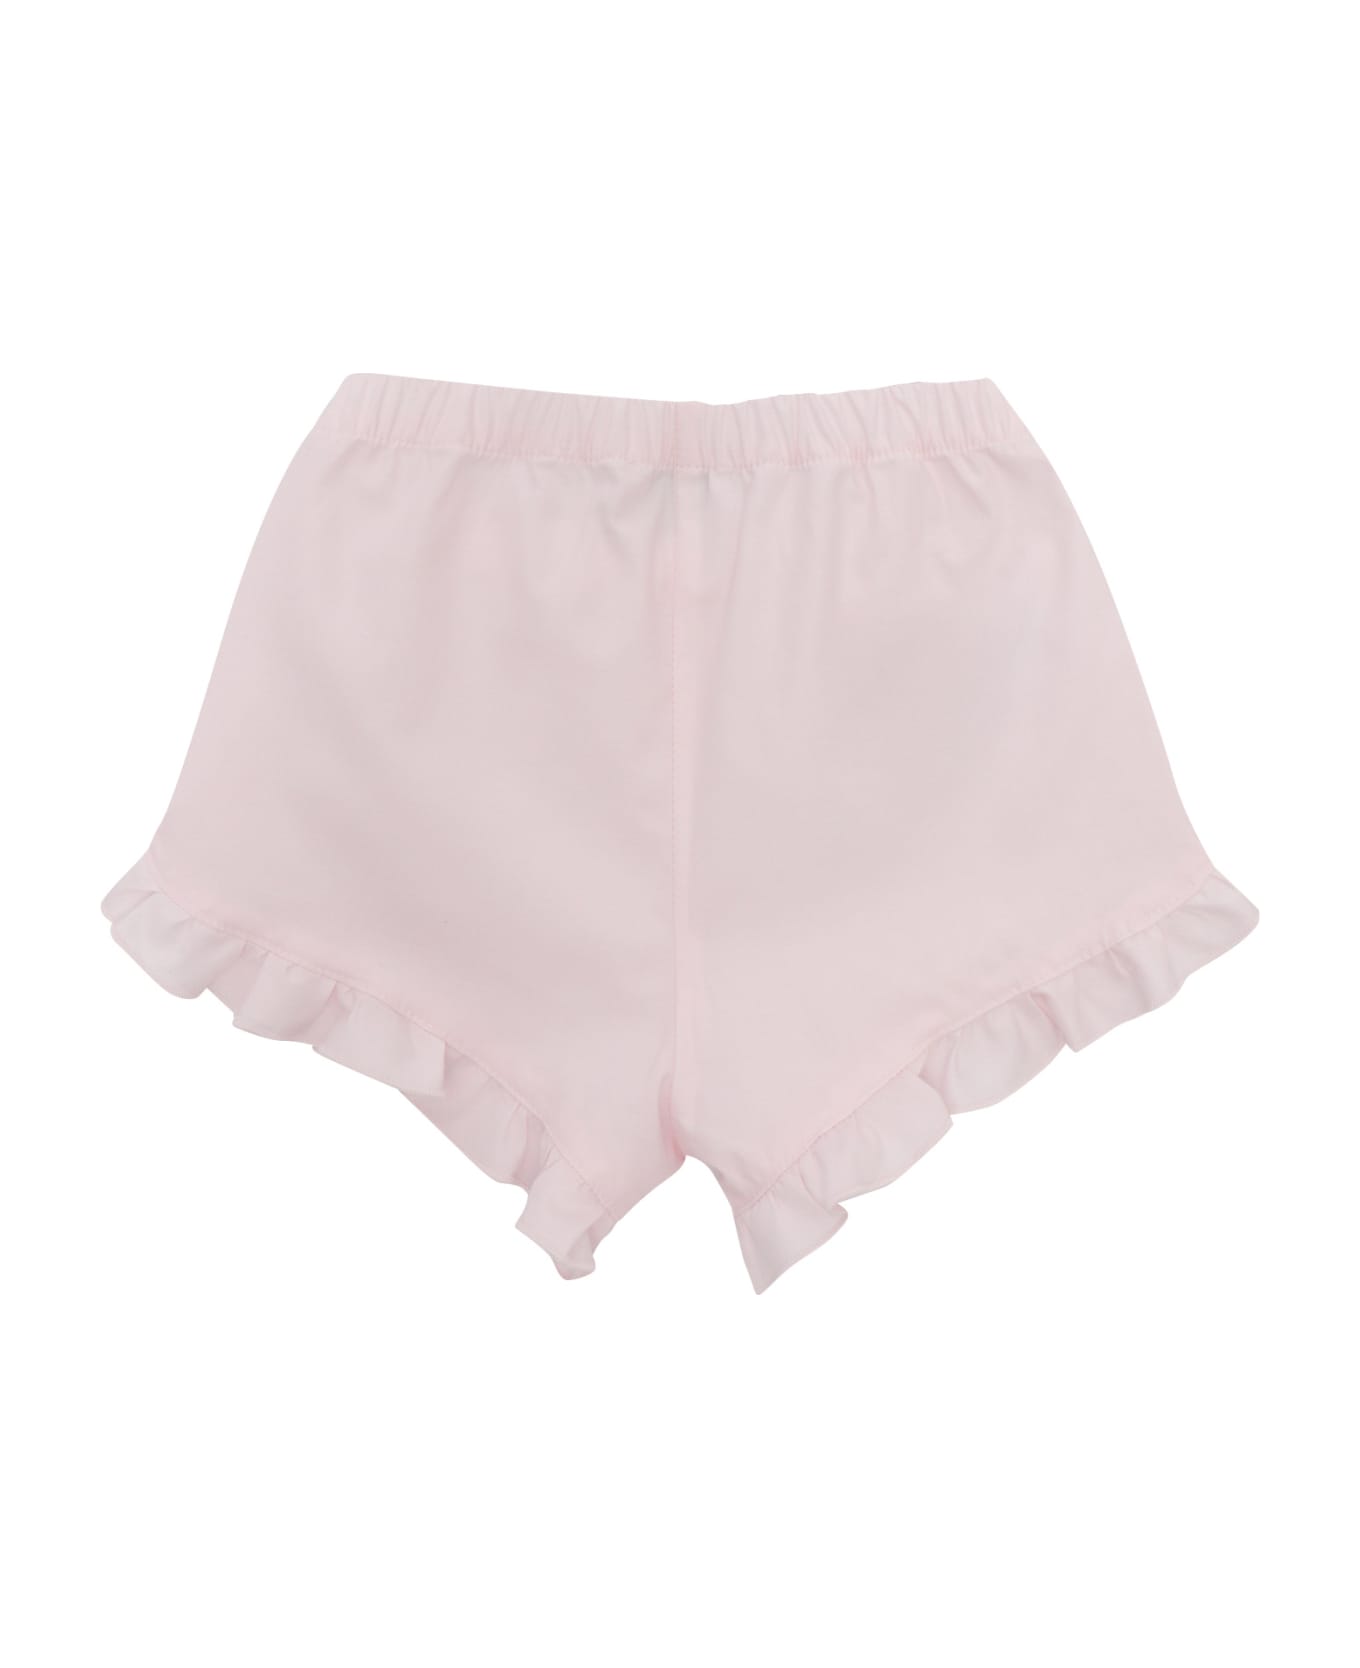 Il Gufo Pink Shorts - PINK